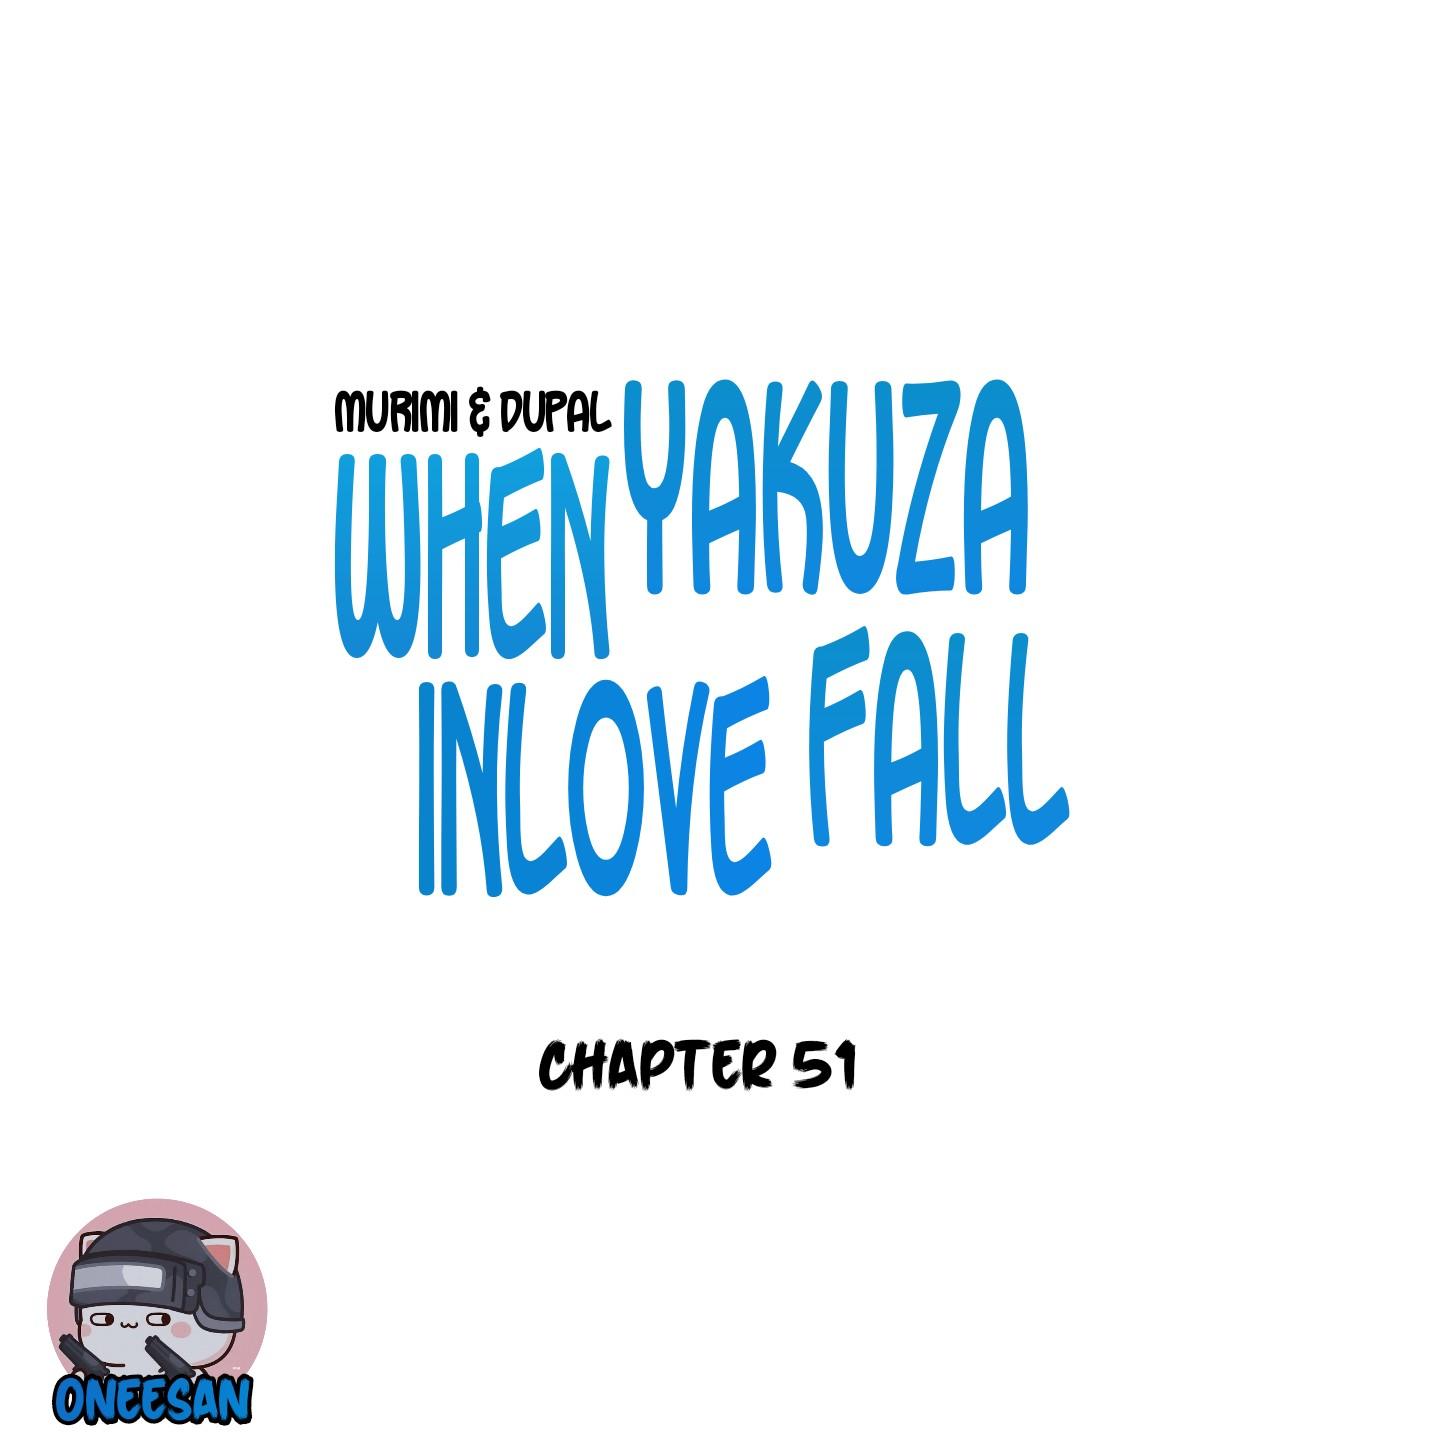 When The Yakuza Falls Inlove - Page 2